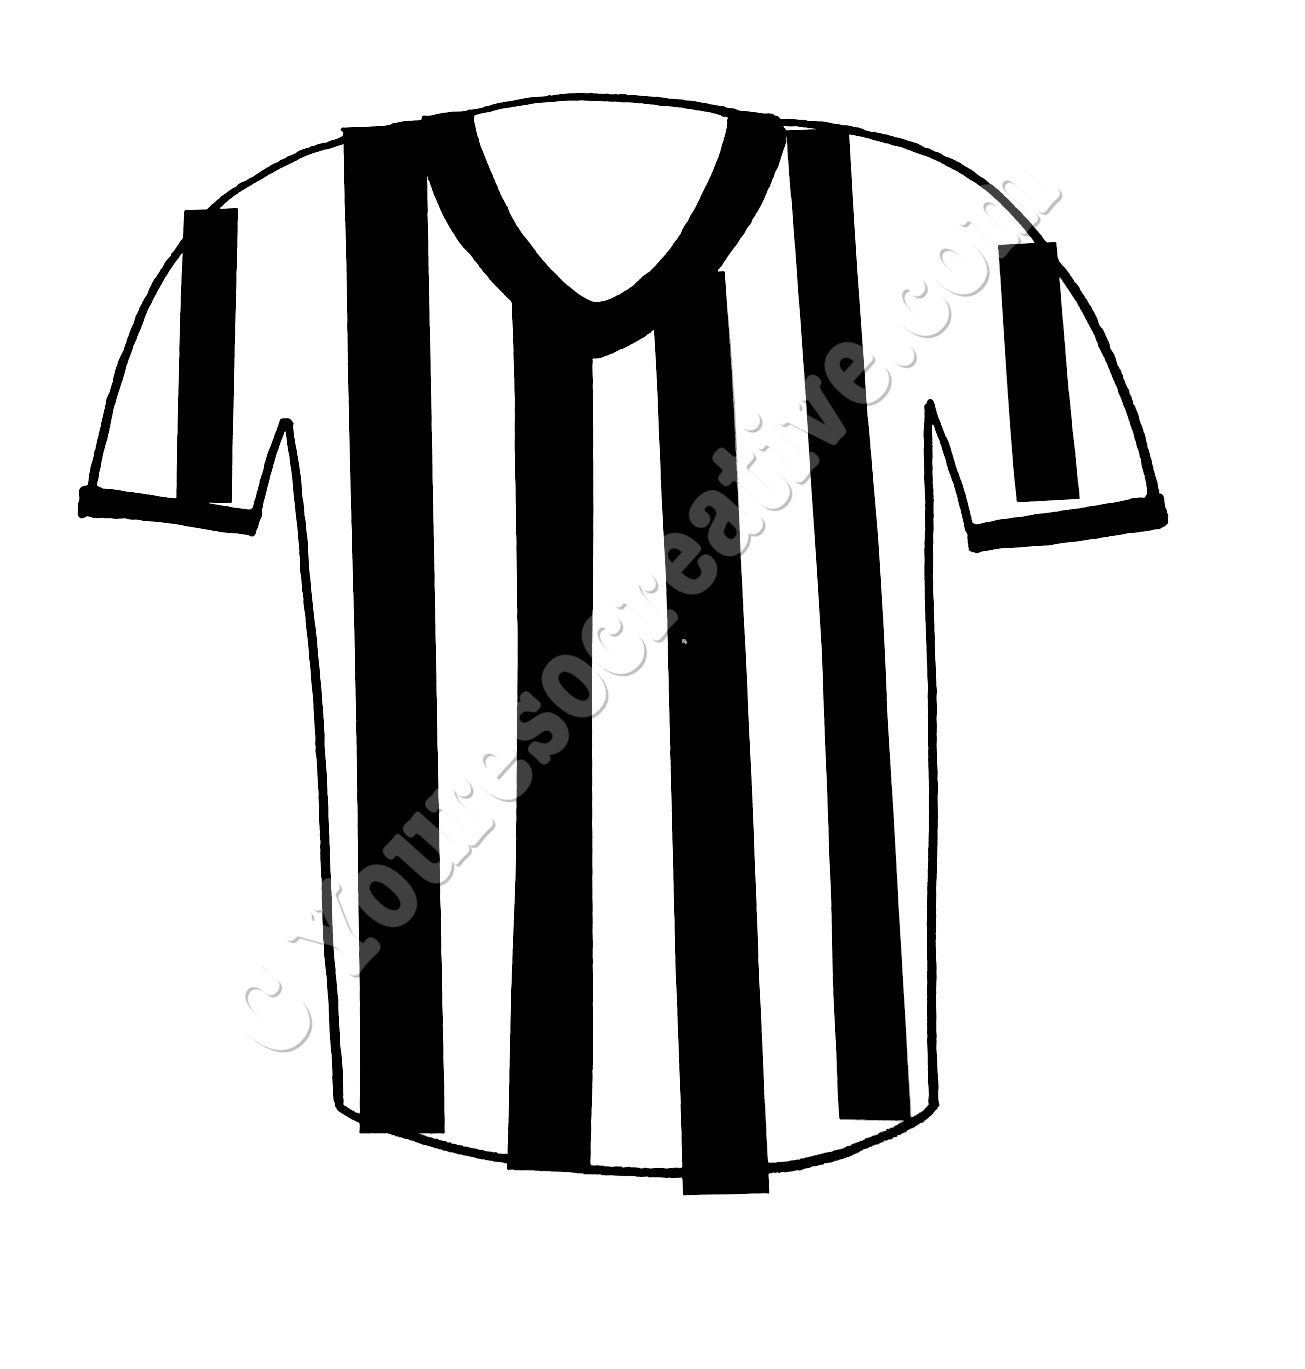 Referee Shirt - You're so creative